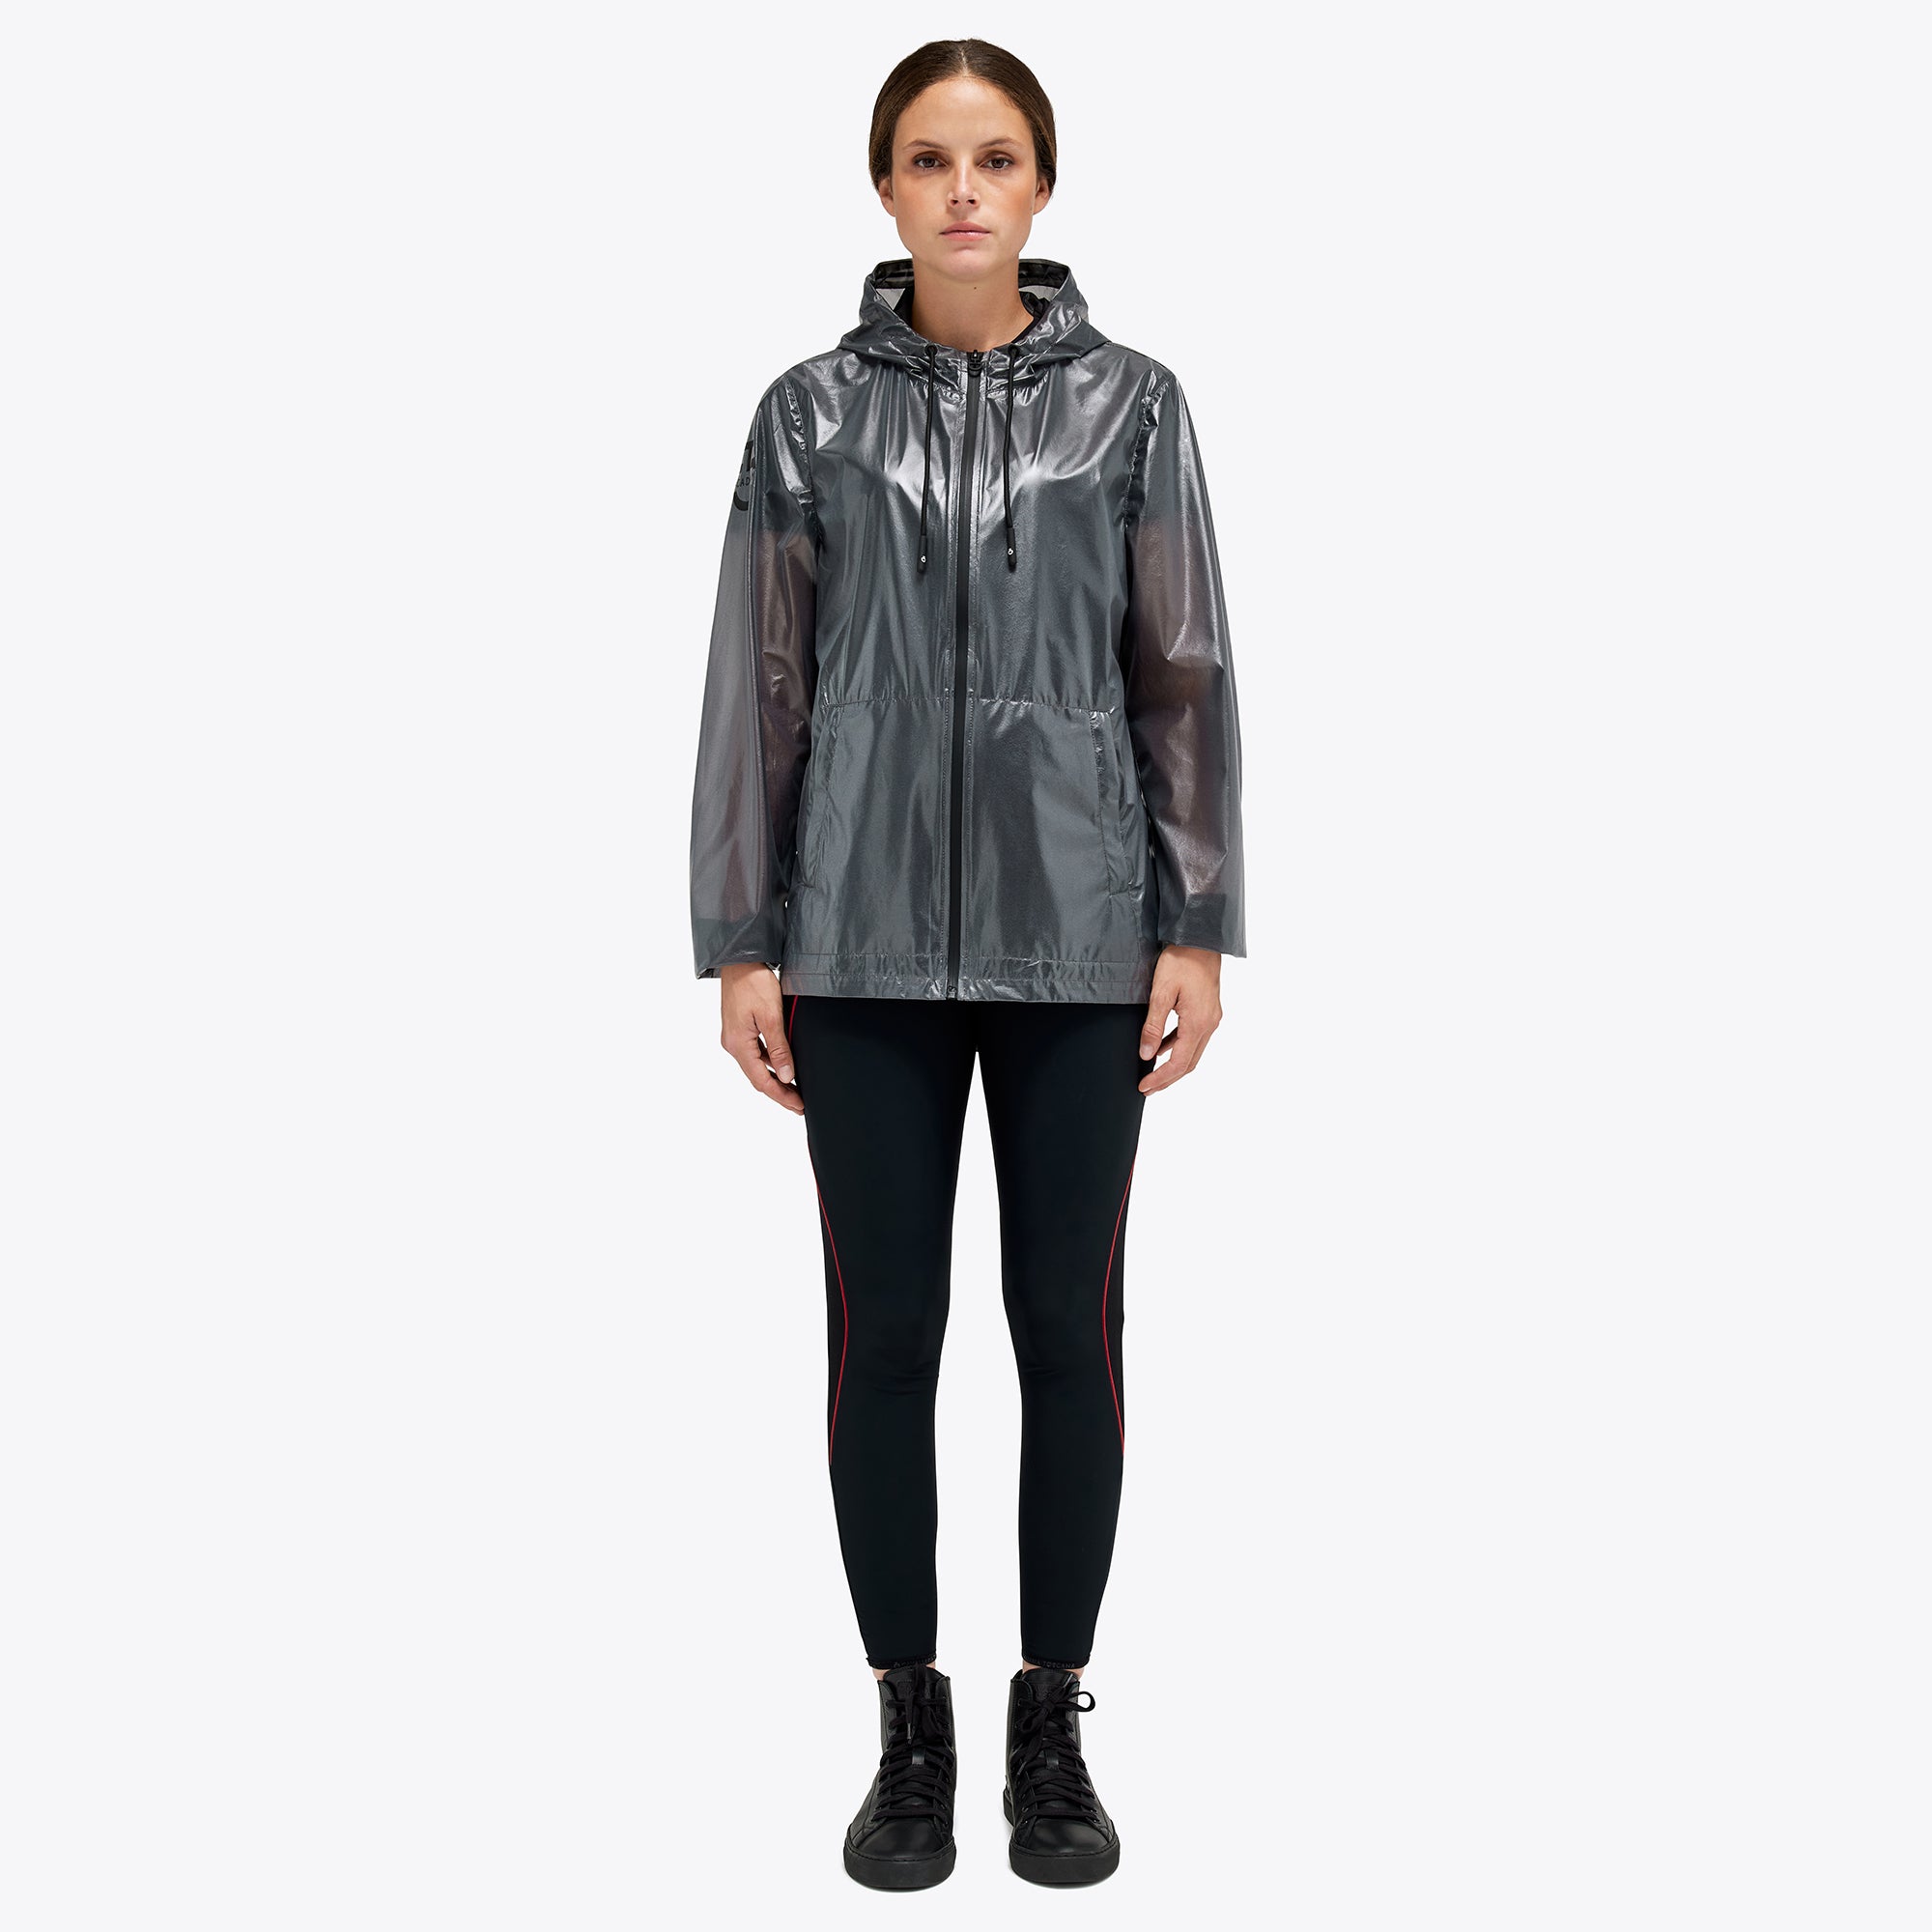 CT Academy women's rain jacket